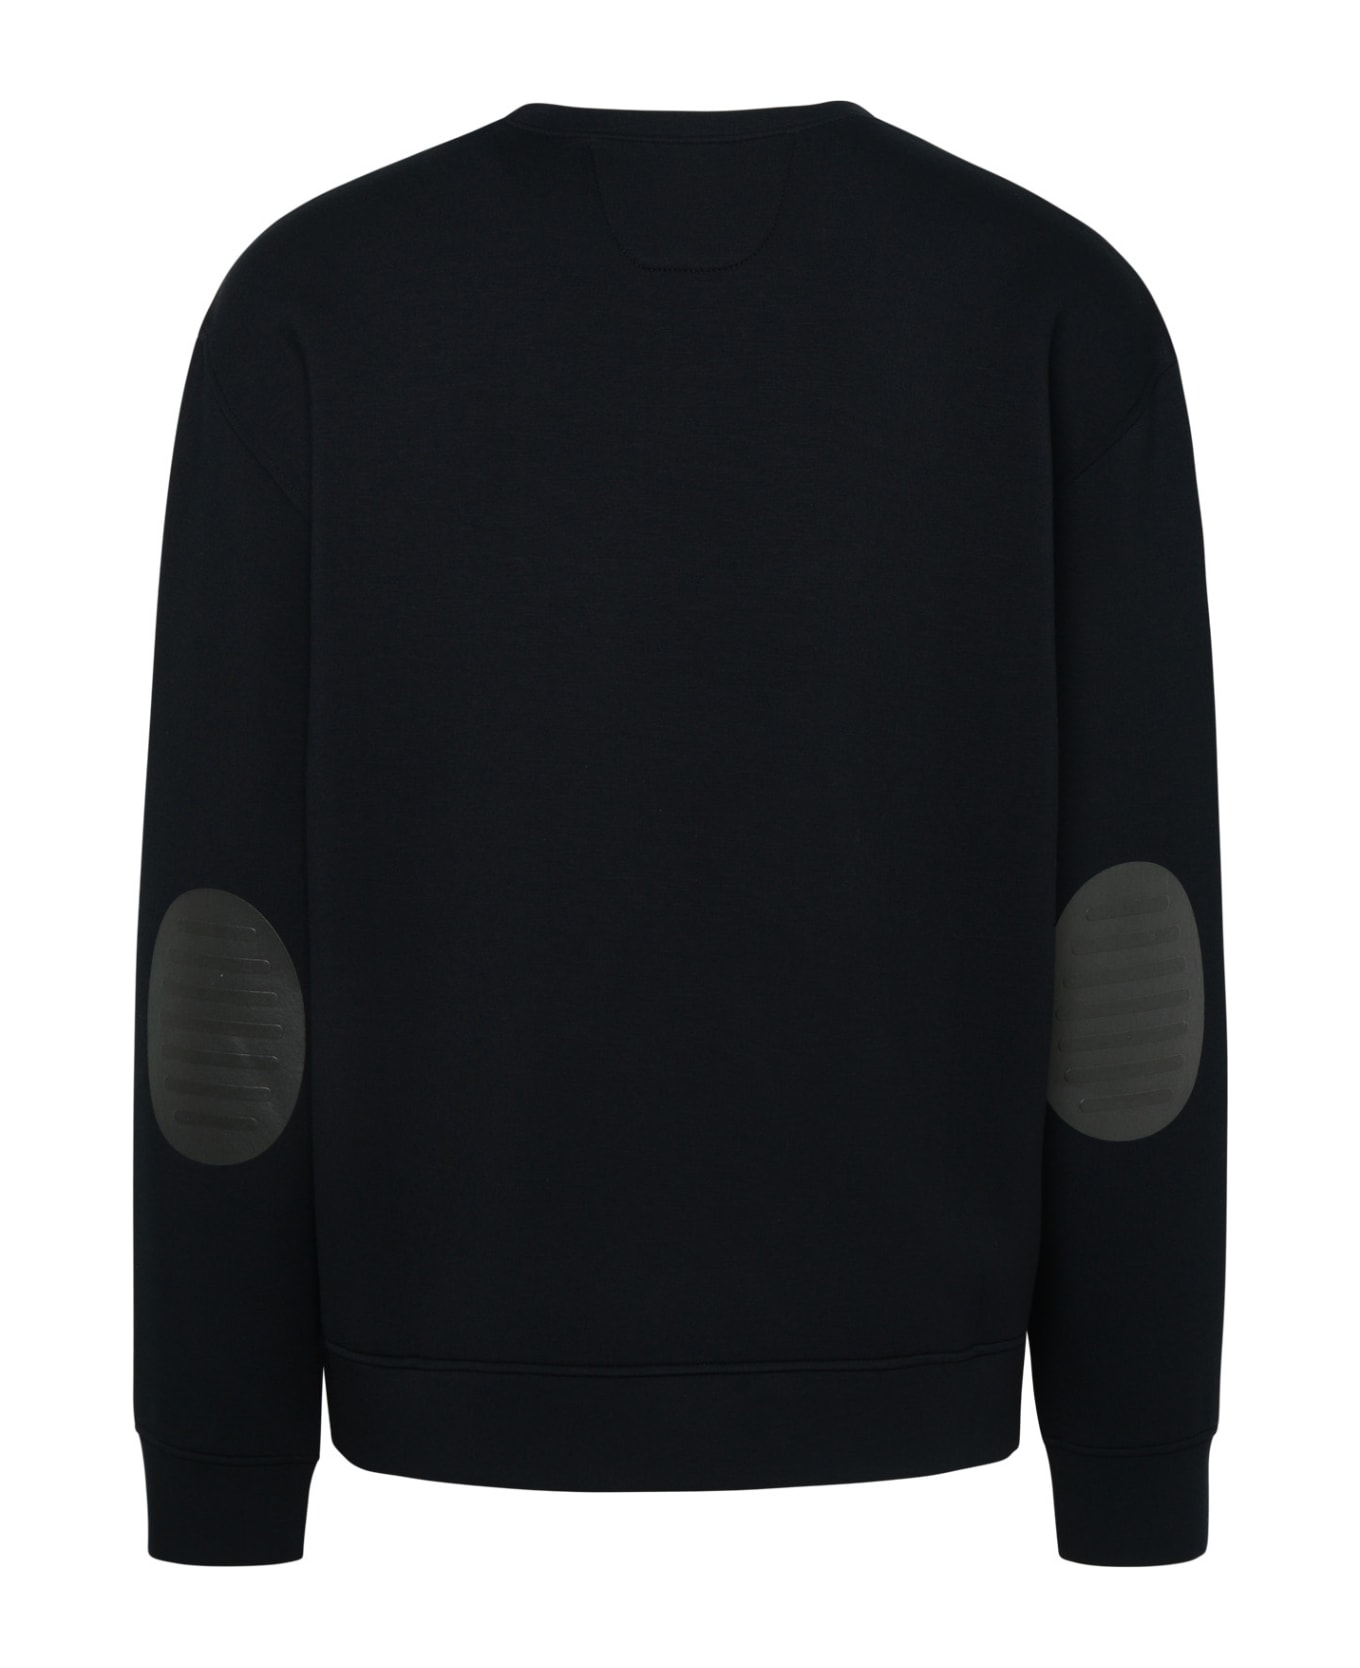 Ferrari Black Cotton Sweatshirt - Black